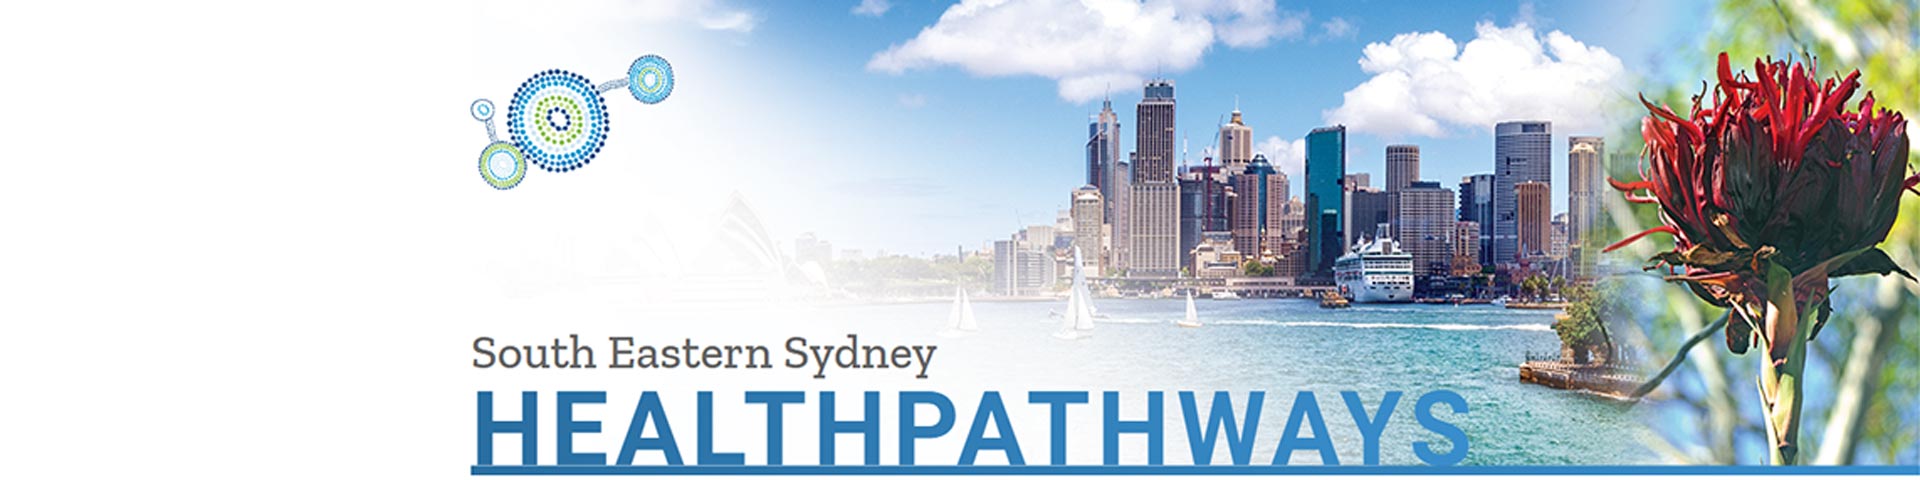 SES HealthPathways Program (South Eastern Sydney)